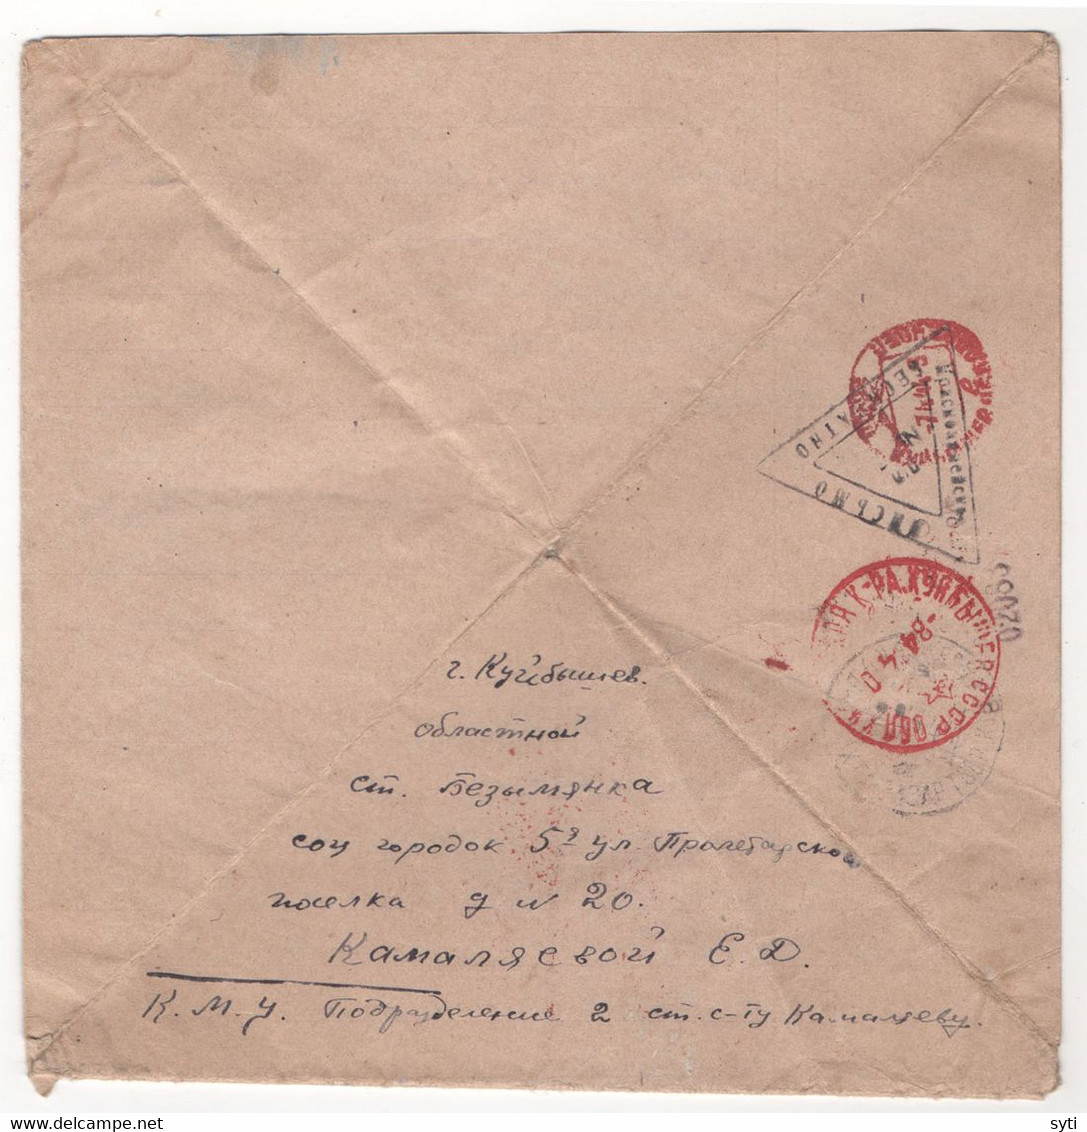 Russia 1943 Asia Serhetabat Turkmenistan KUSHKA Afghanistan Border Military Letter To Kuibyshev Censorship 02088 - Briefe U. Dokumente